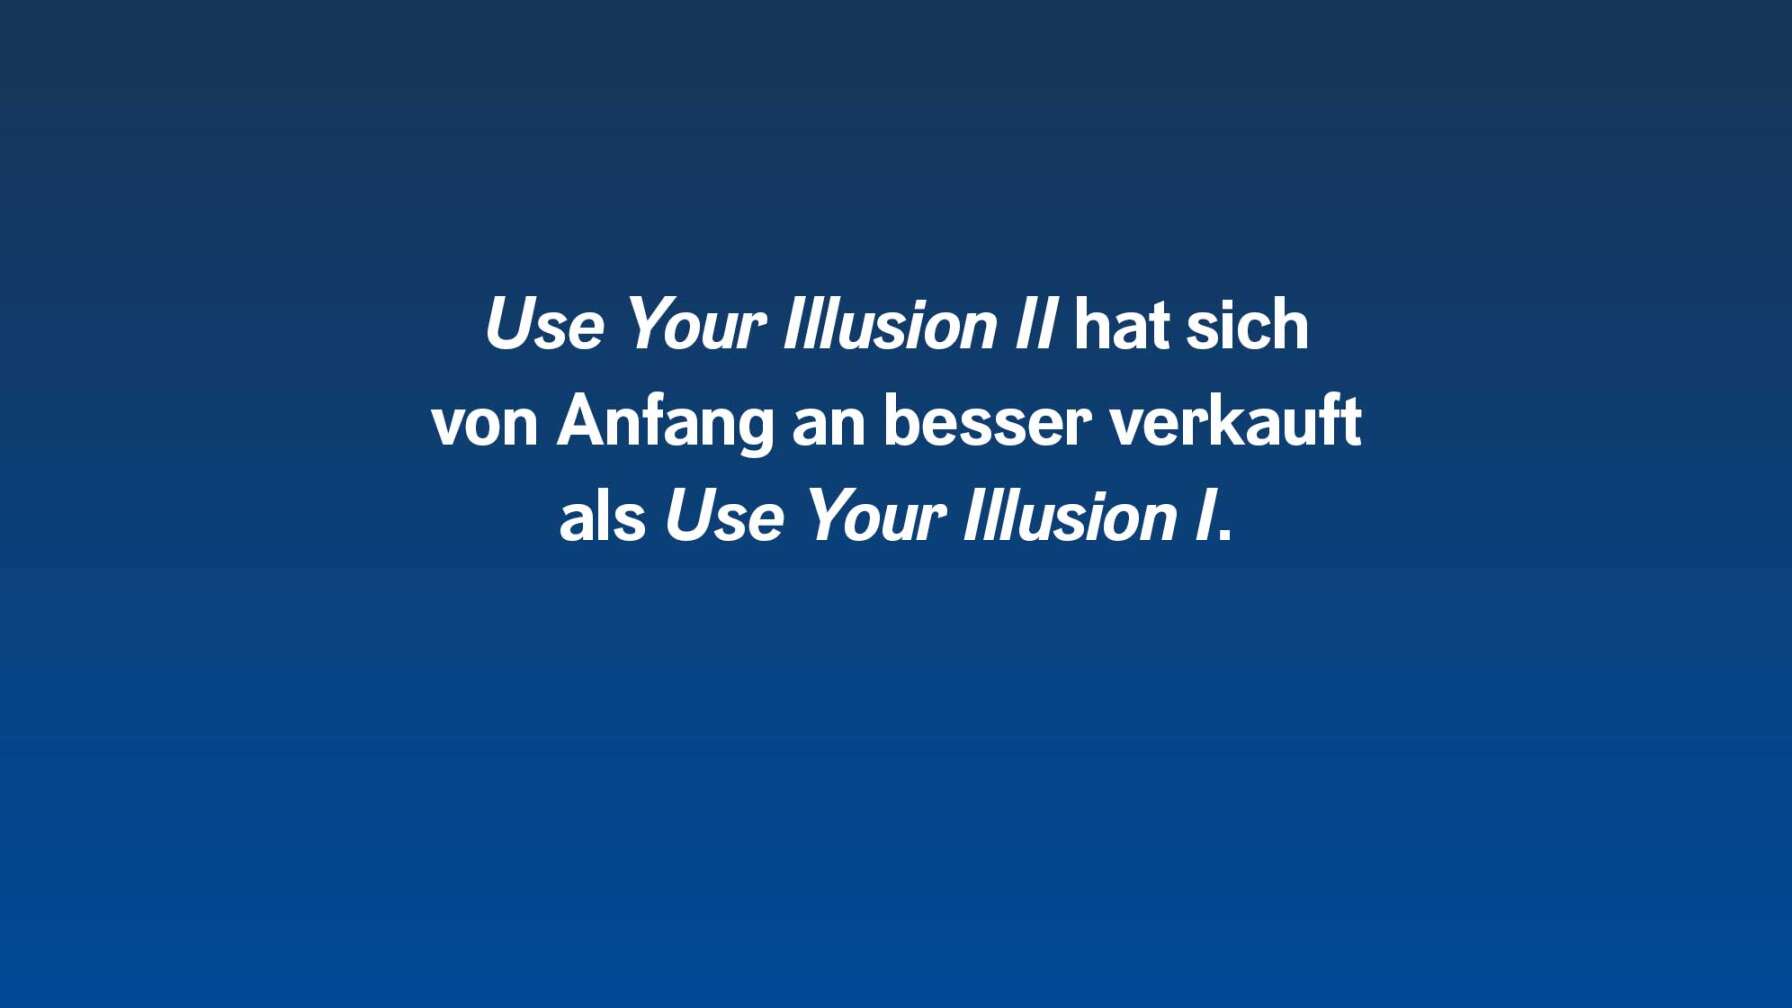 "Use Your Illusion 2" verkaufte sich besser als "Use Your Illusion 1".